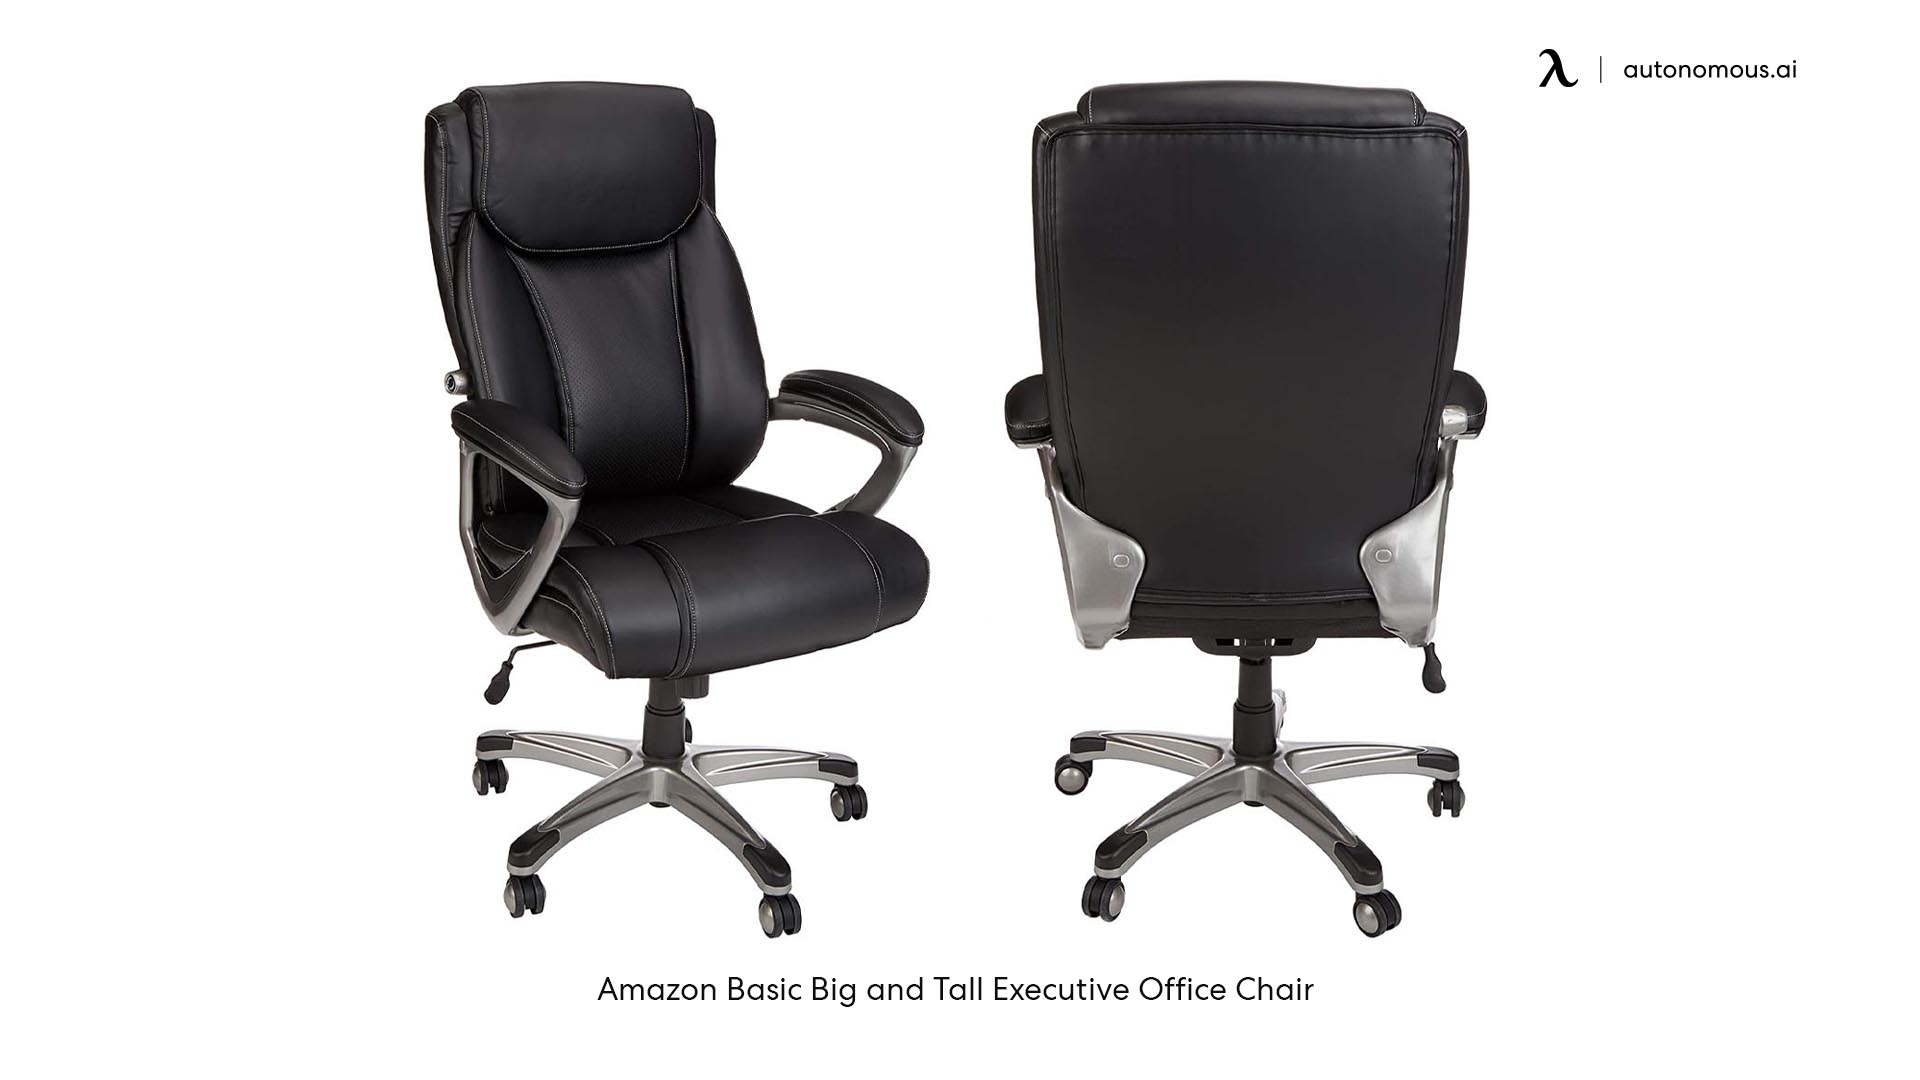 Amazon Basic heavy duty office chairs